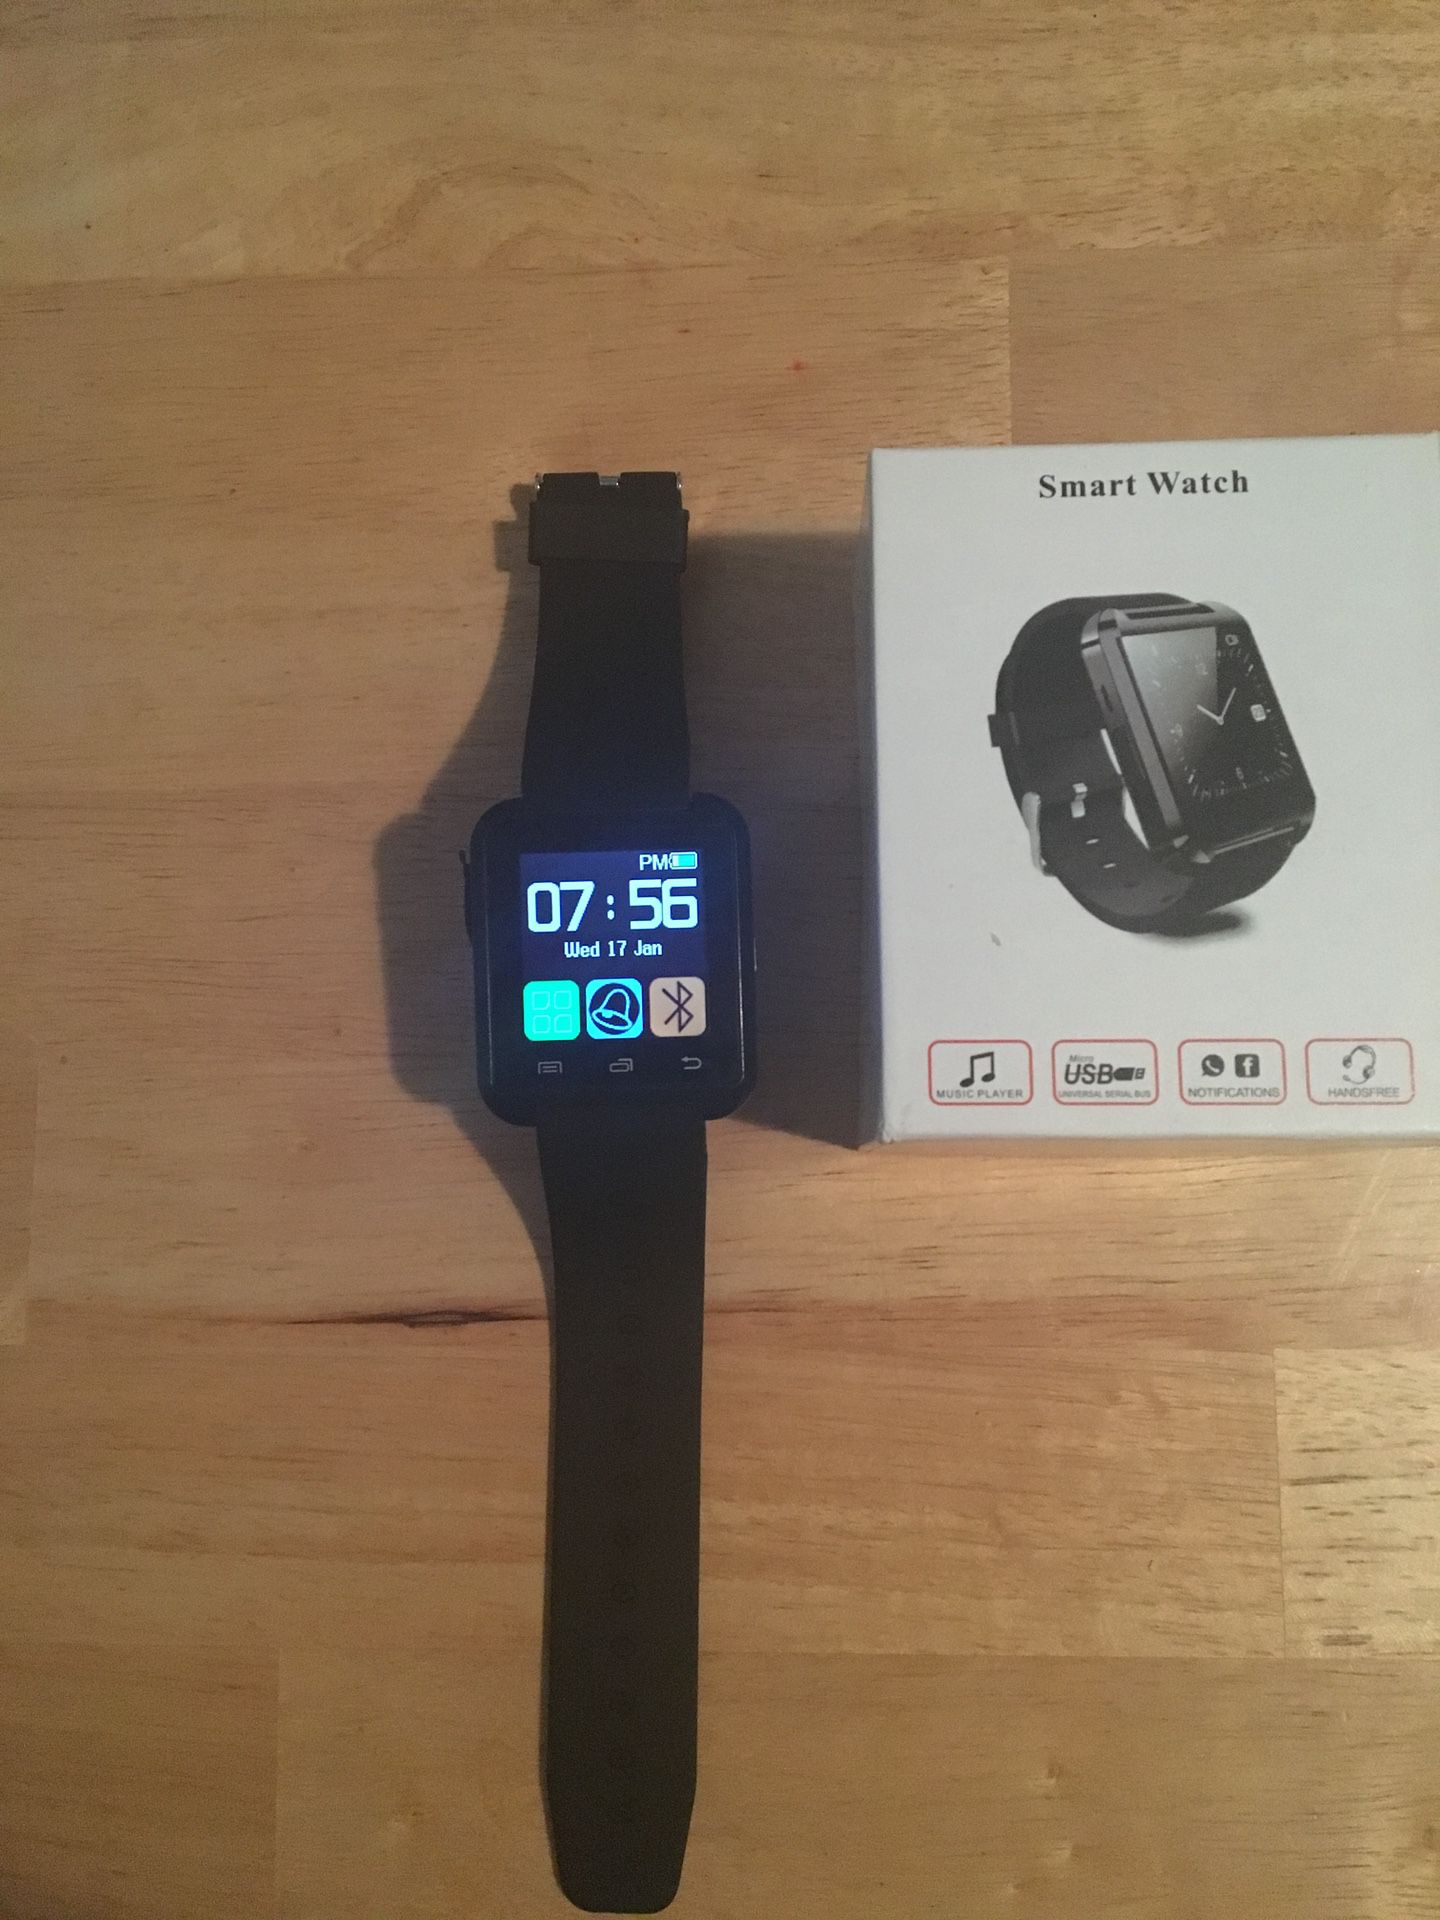 Smart Watch w/ Bluetooth